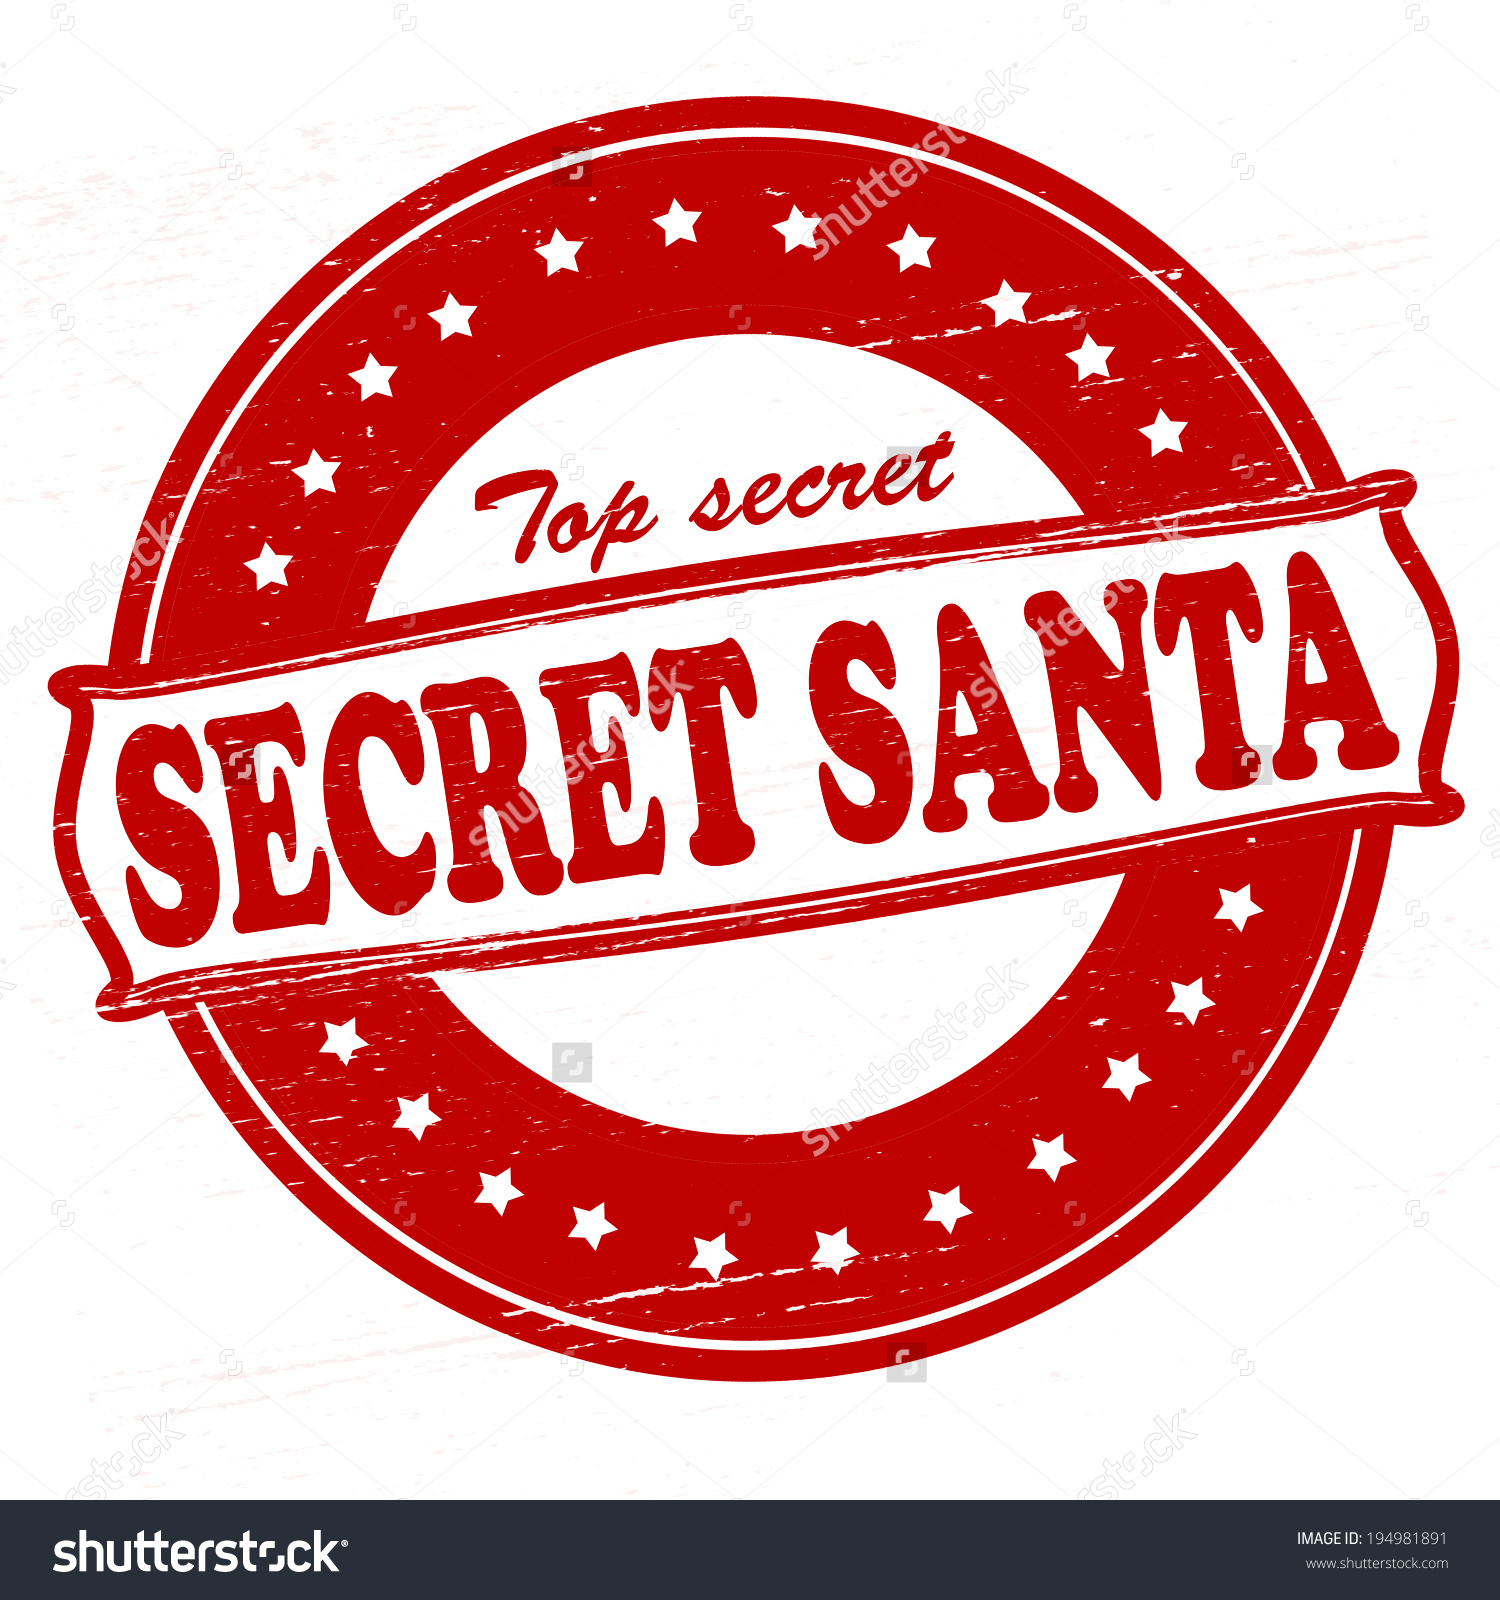 ... Secret Santa - Rubber sta